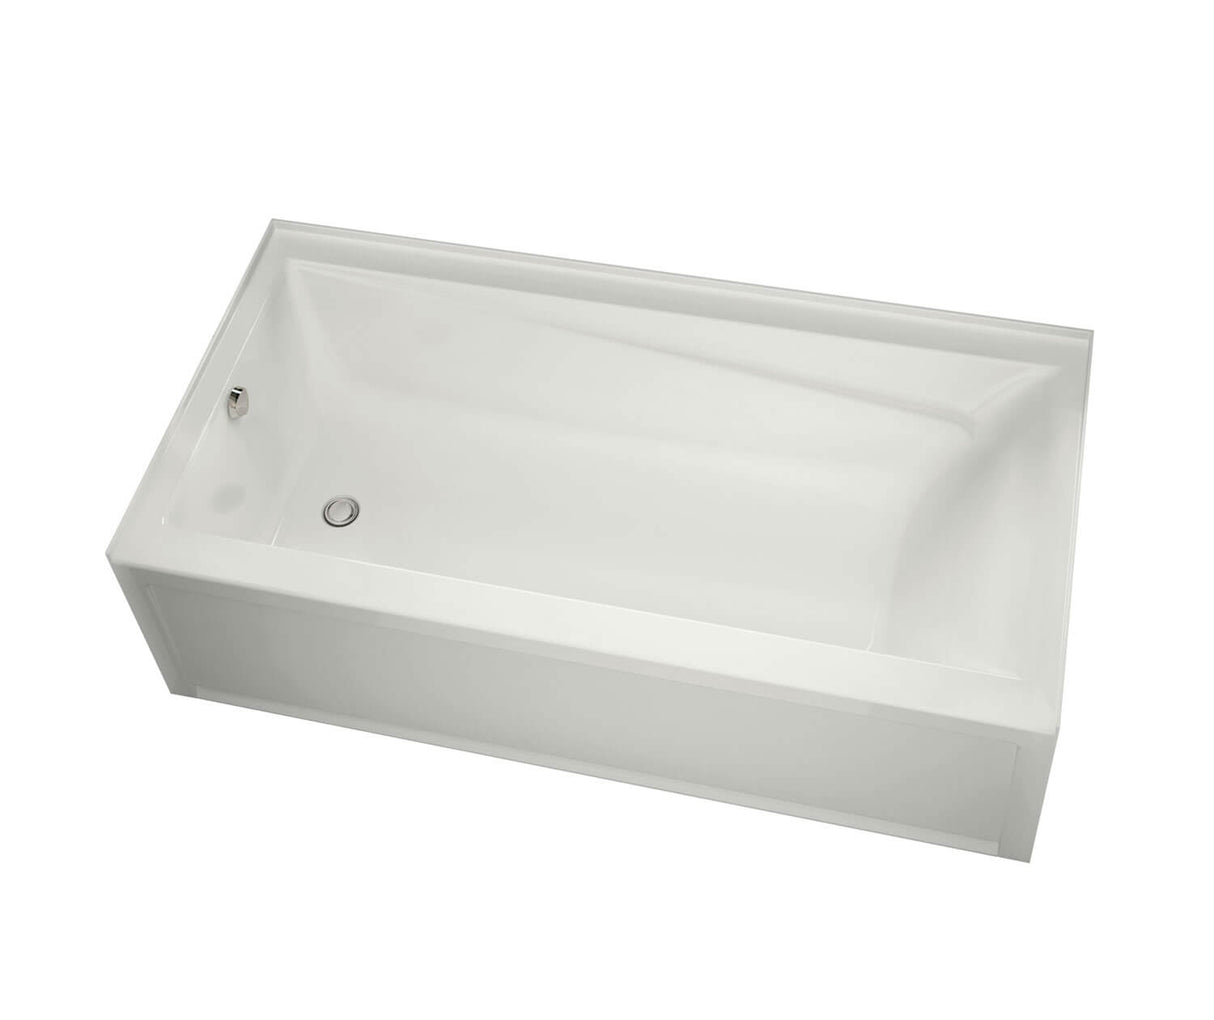 MAAX 105519-003-001-101 Exhibit 6030 IFS Acrylic Alcove Right-Hand Drain Whirlpool Bathtub in White